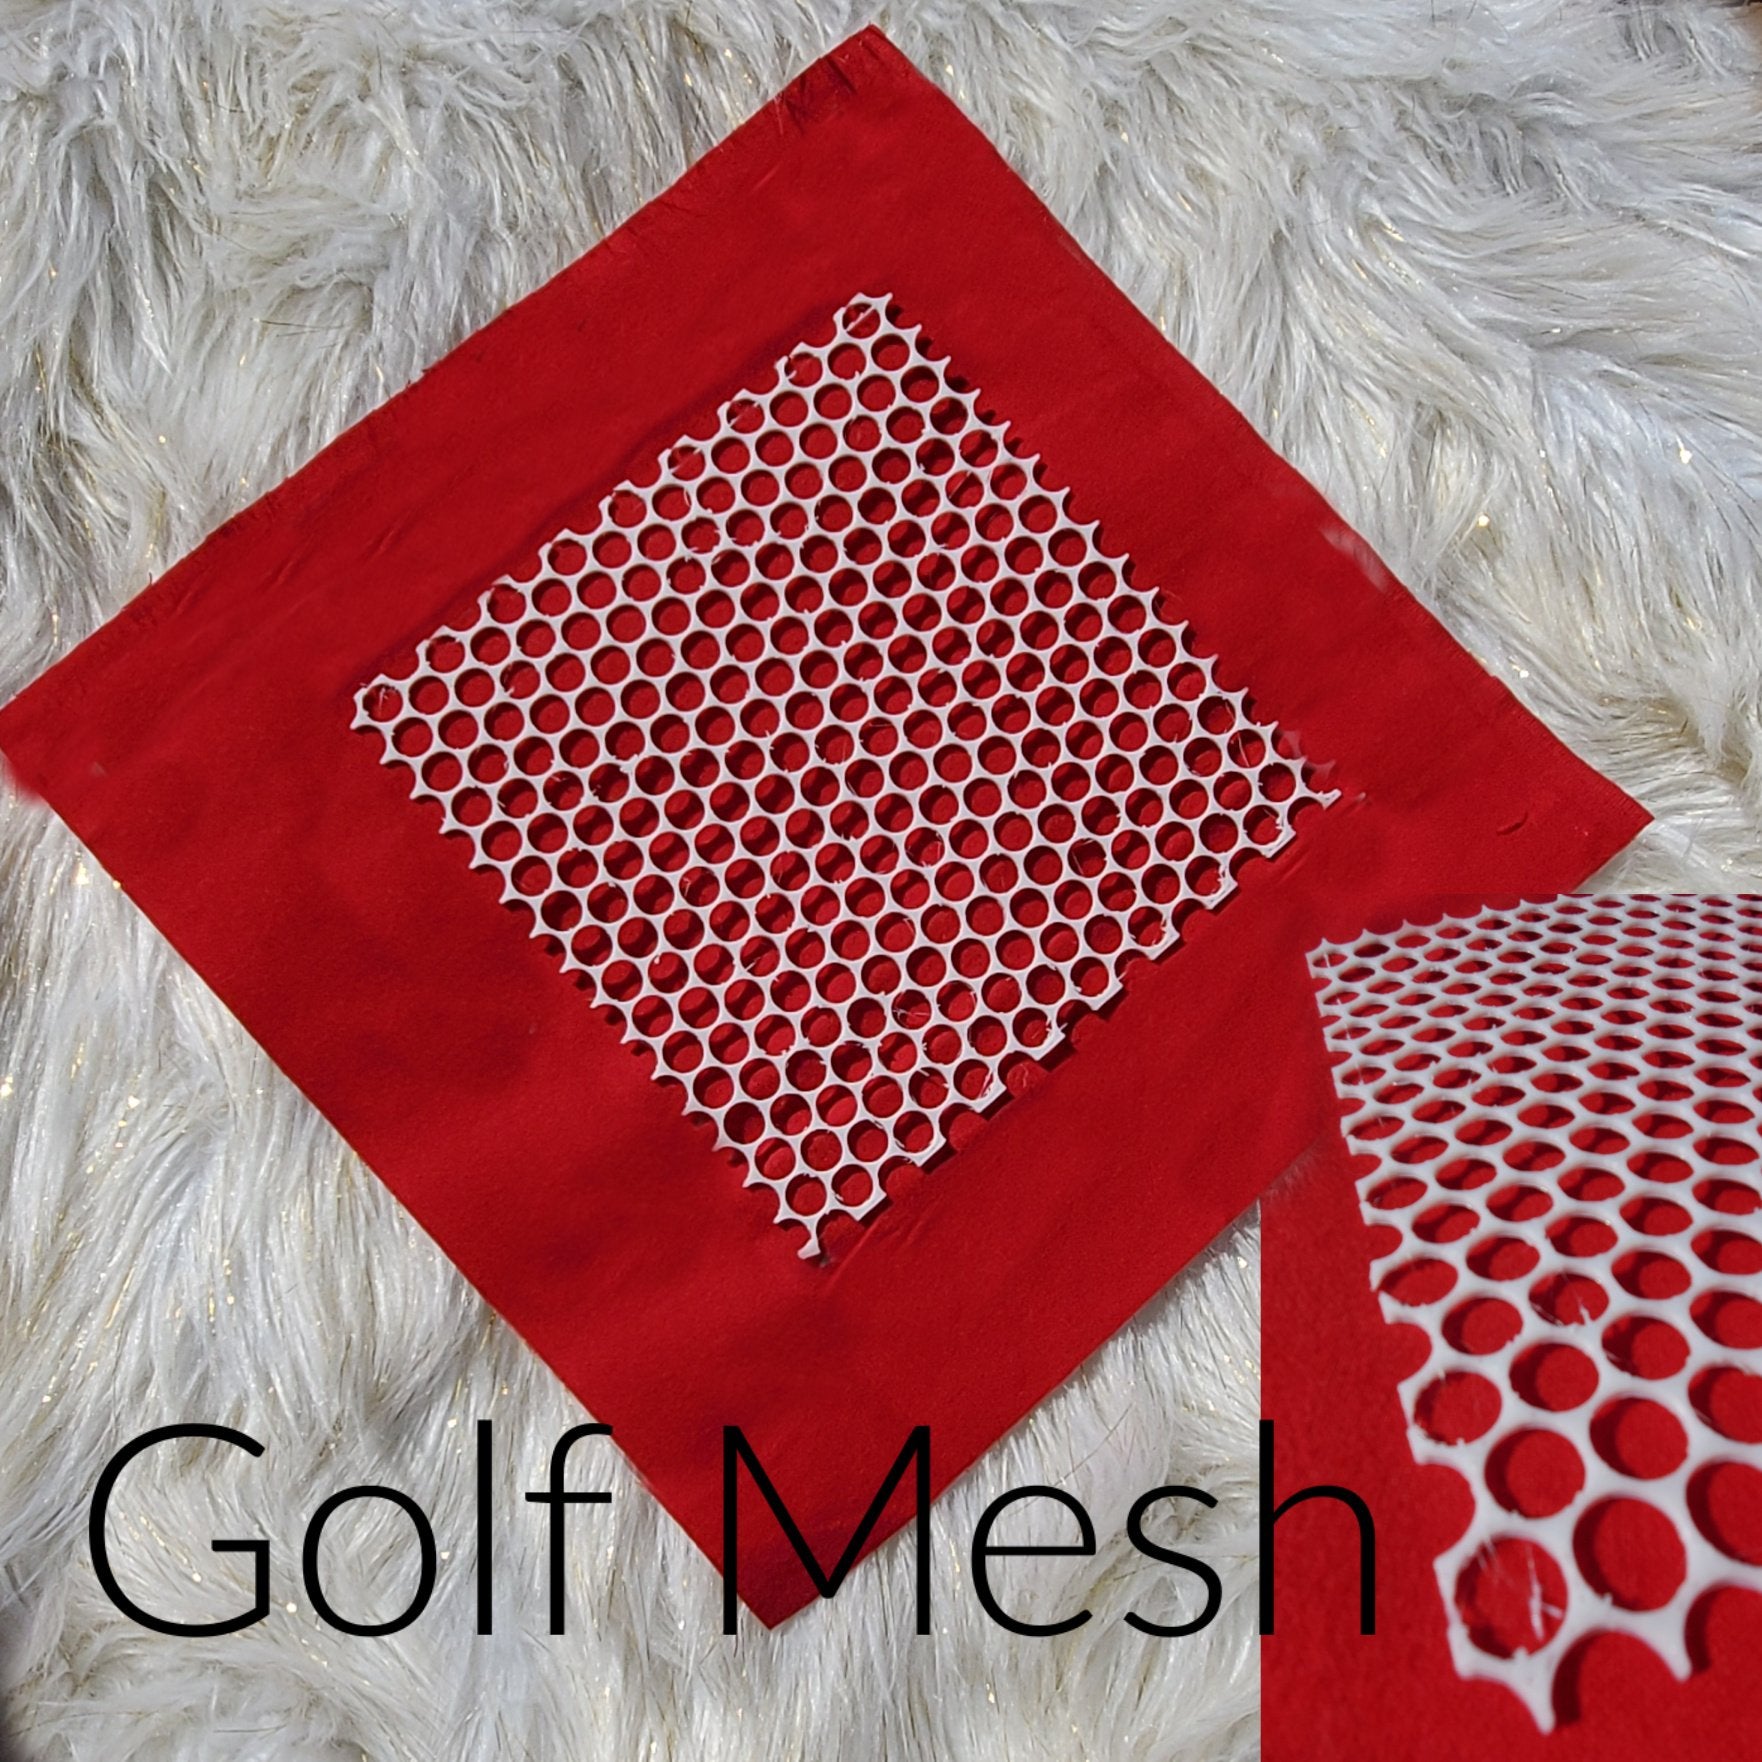 GolfBall Mesh STL file download